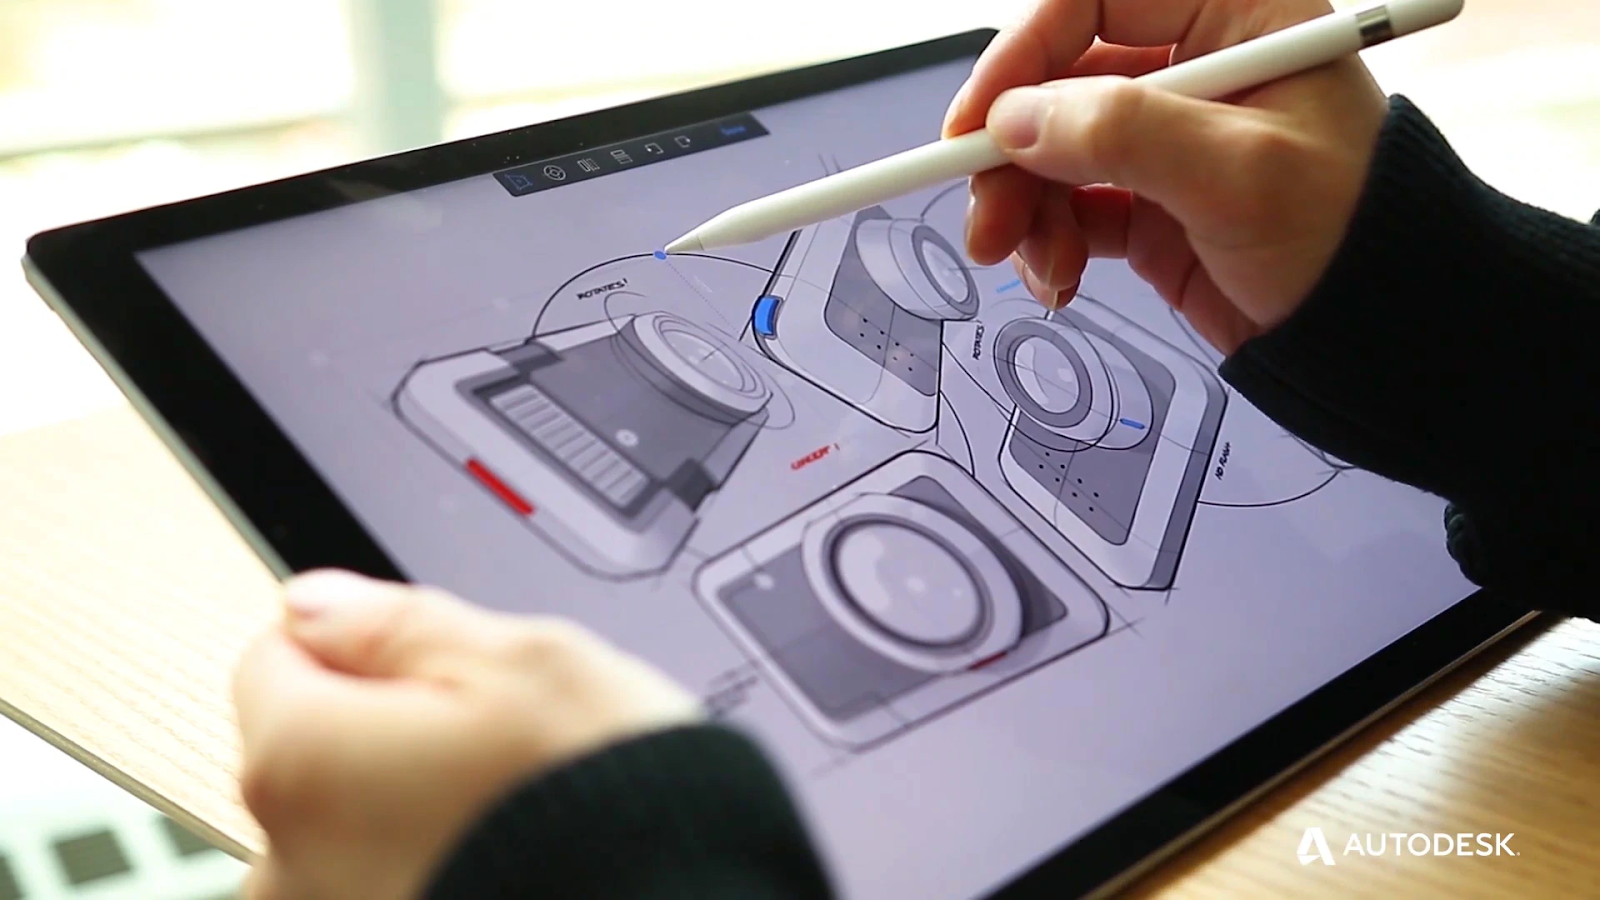 Aplicación para Android Autodesk Sketchbook